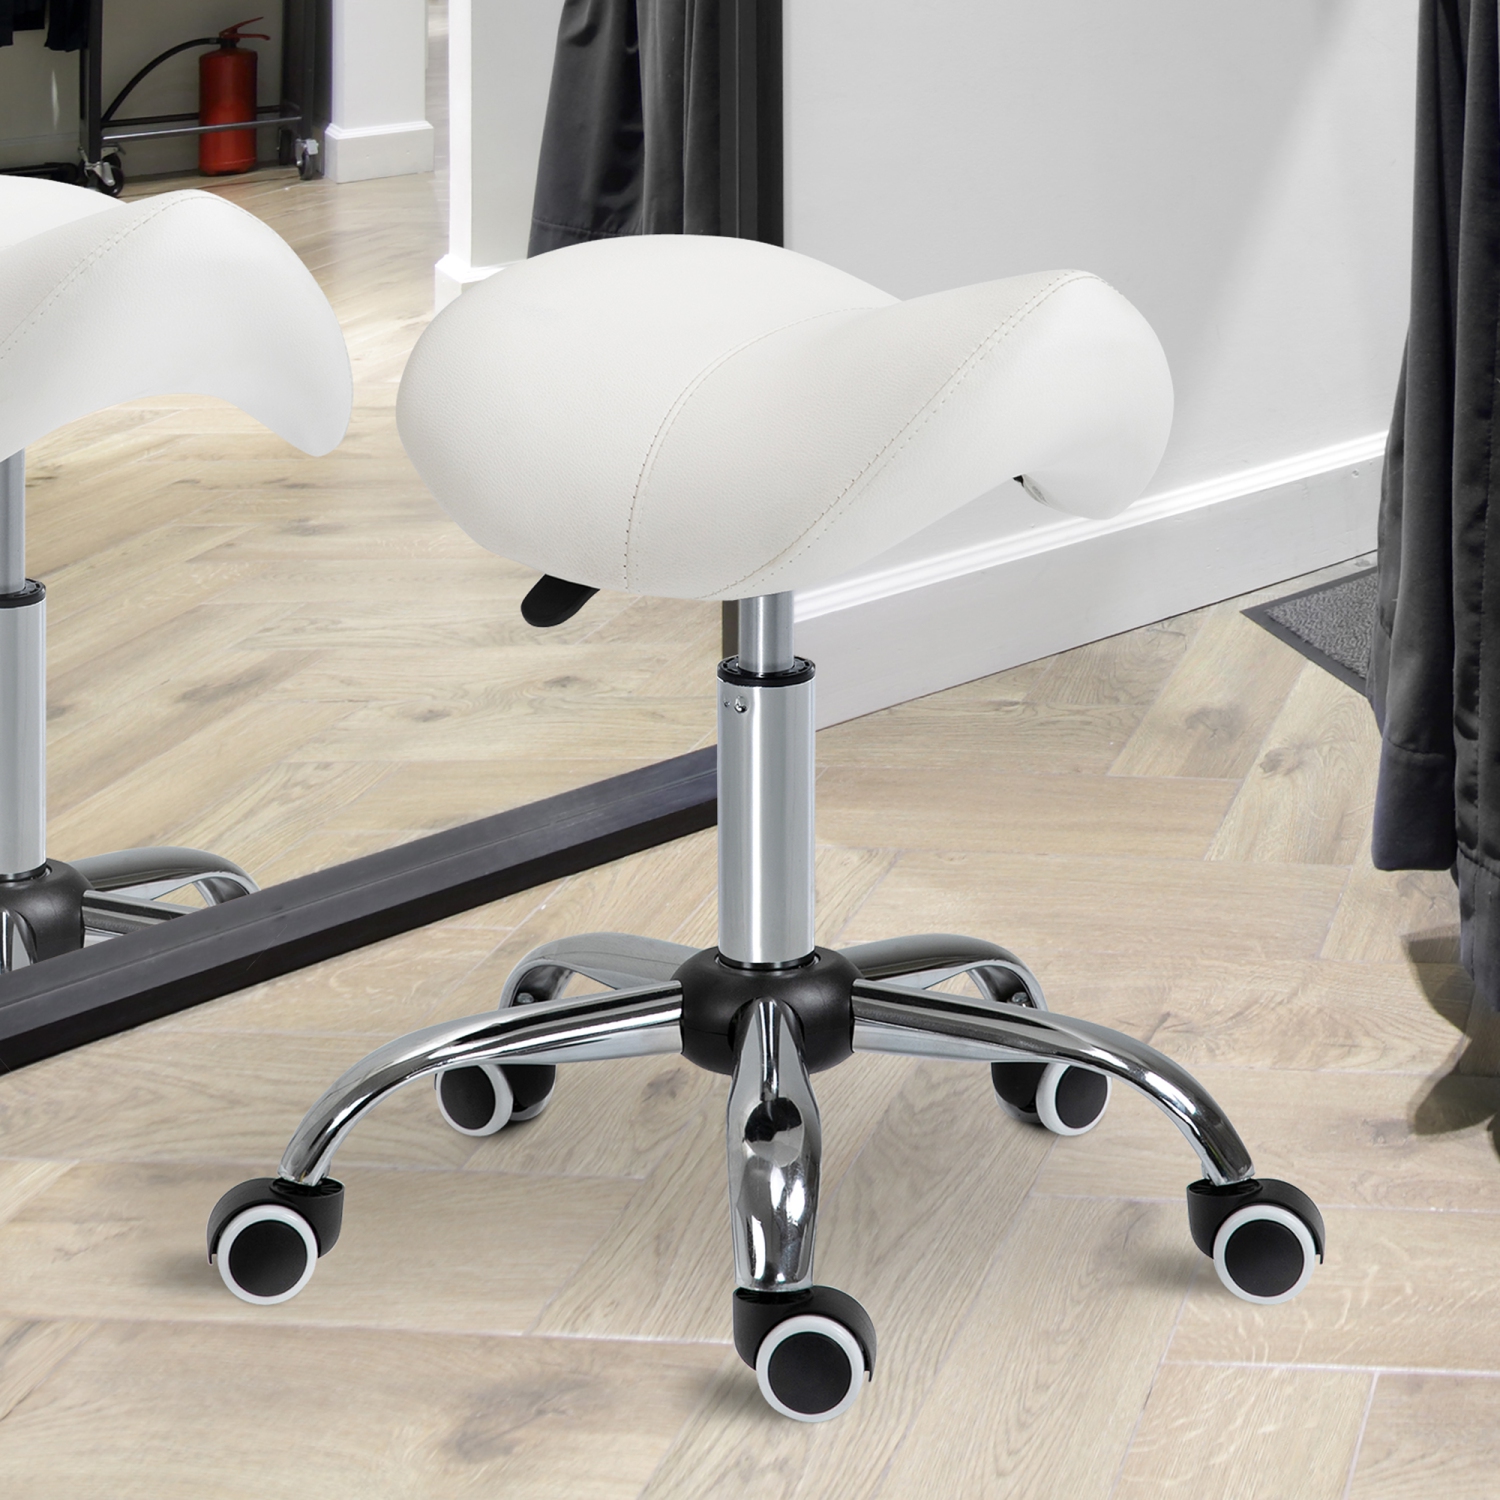 HOMCOM Adjustable Hydraulic Rolling Salon Stool Swivel Saddle Chair Spa  Beauty Seat PU Leather, Cream White